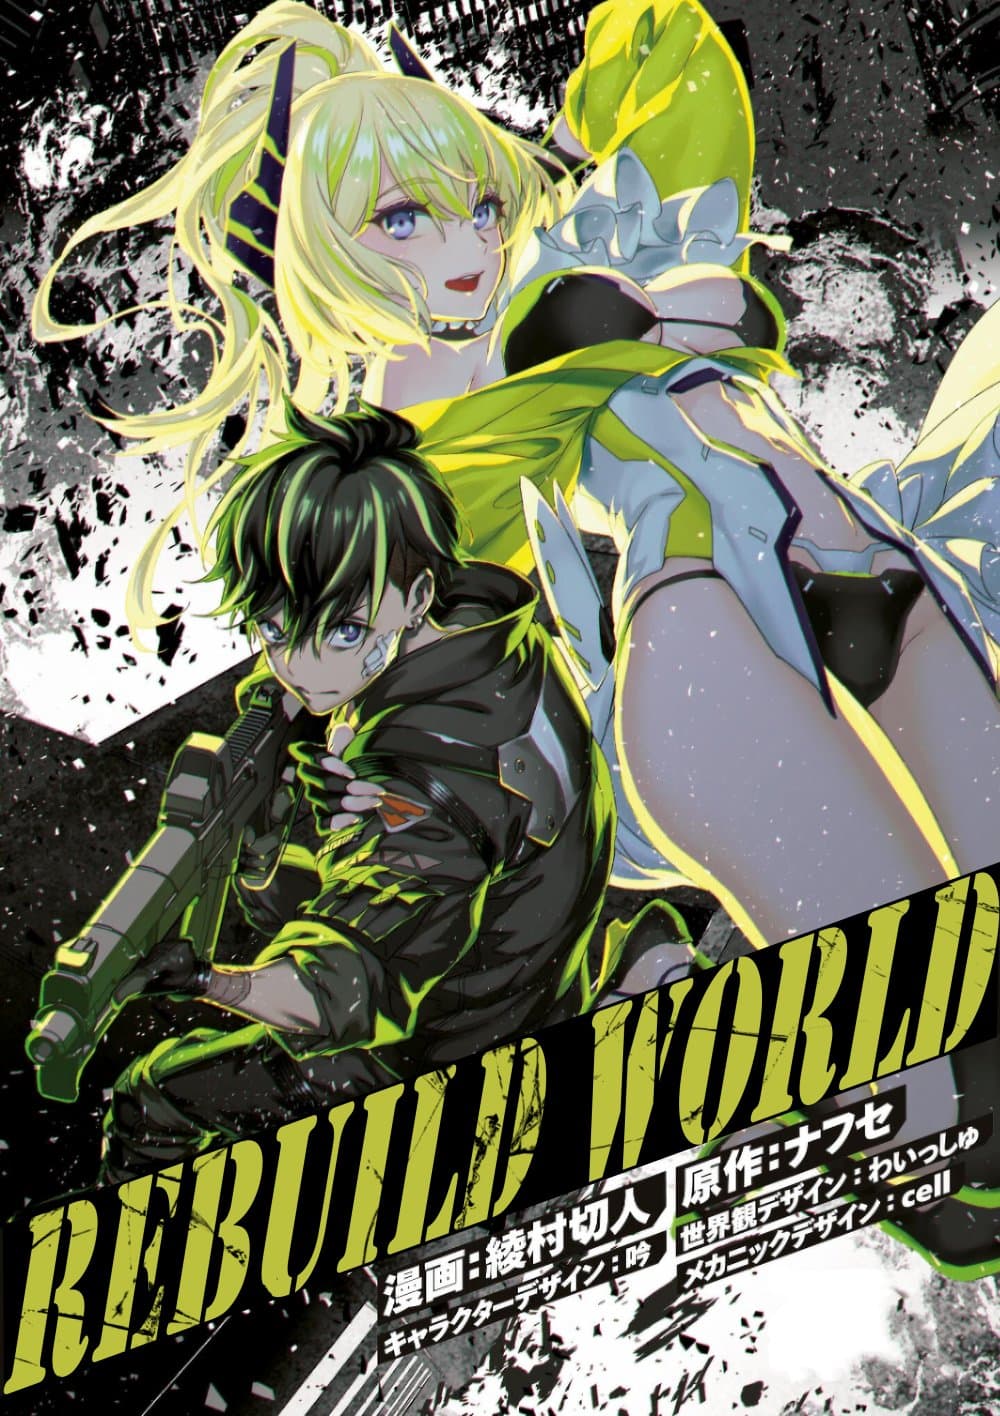 Rebuild World 29 (1)